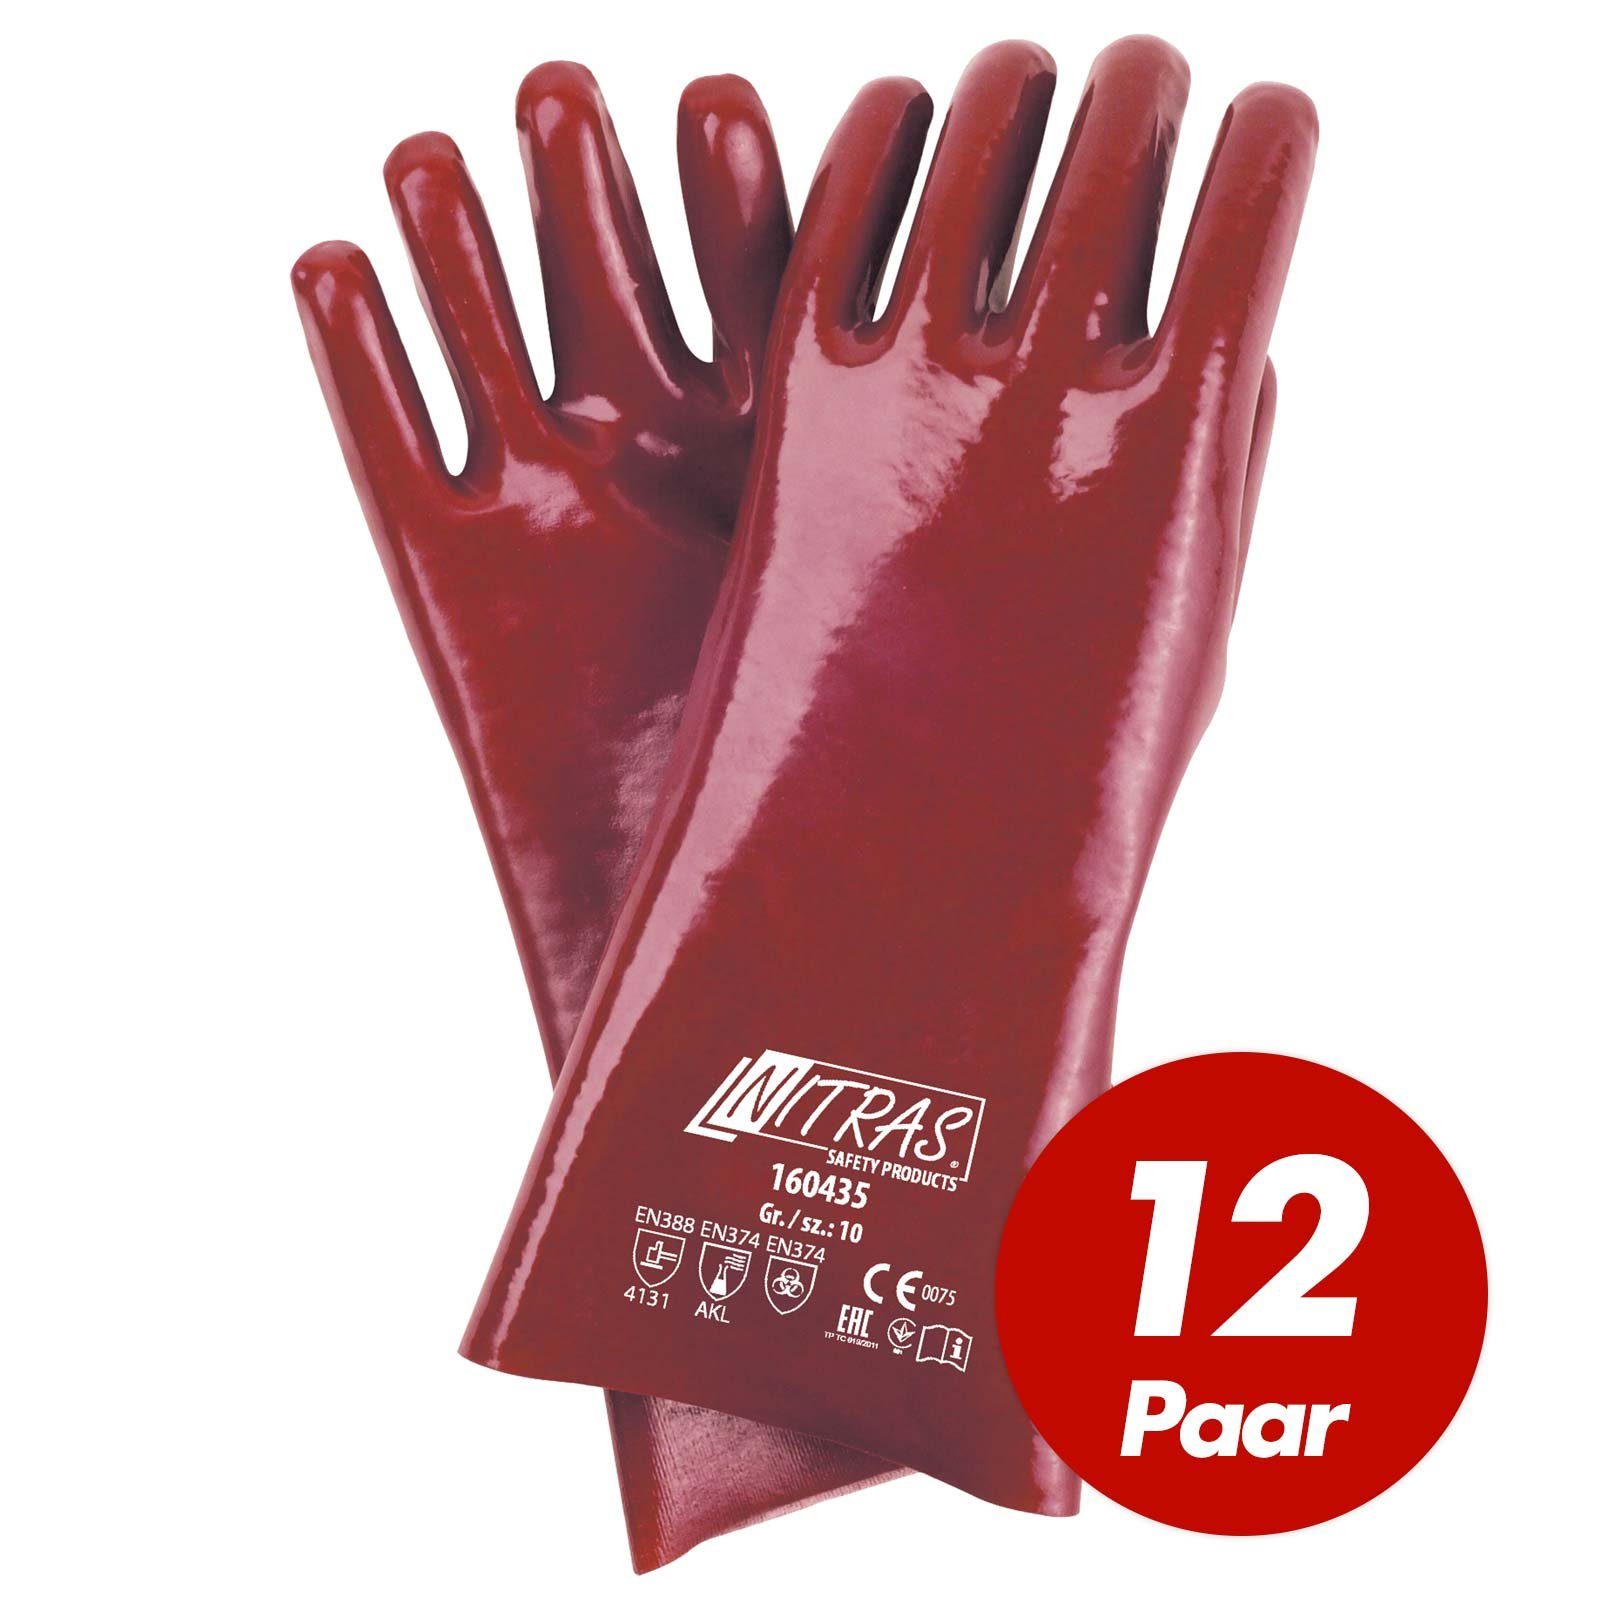 Nitras Putzhandschuh NITRAS PVC-Handschuhe Handschuhe 160435 - 12 Paar vollbeschichtete (Set)